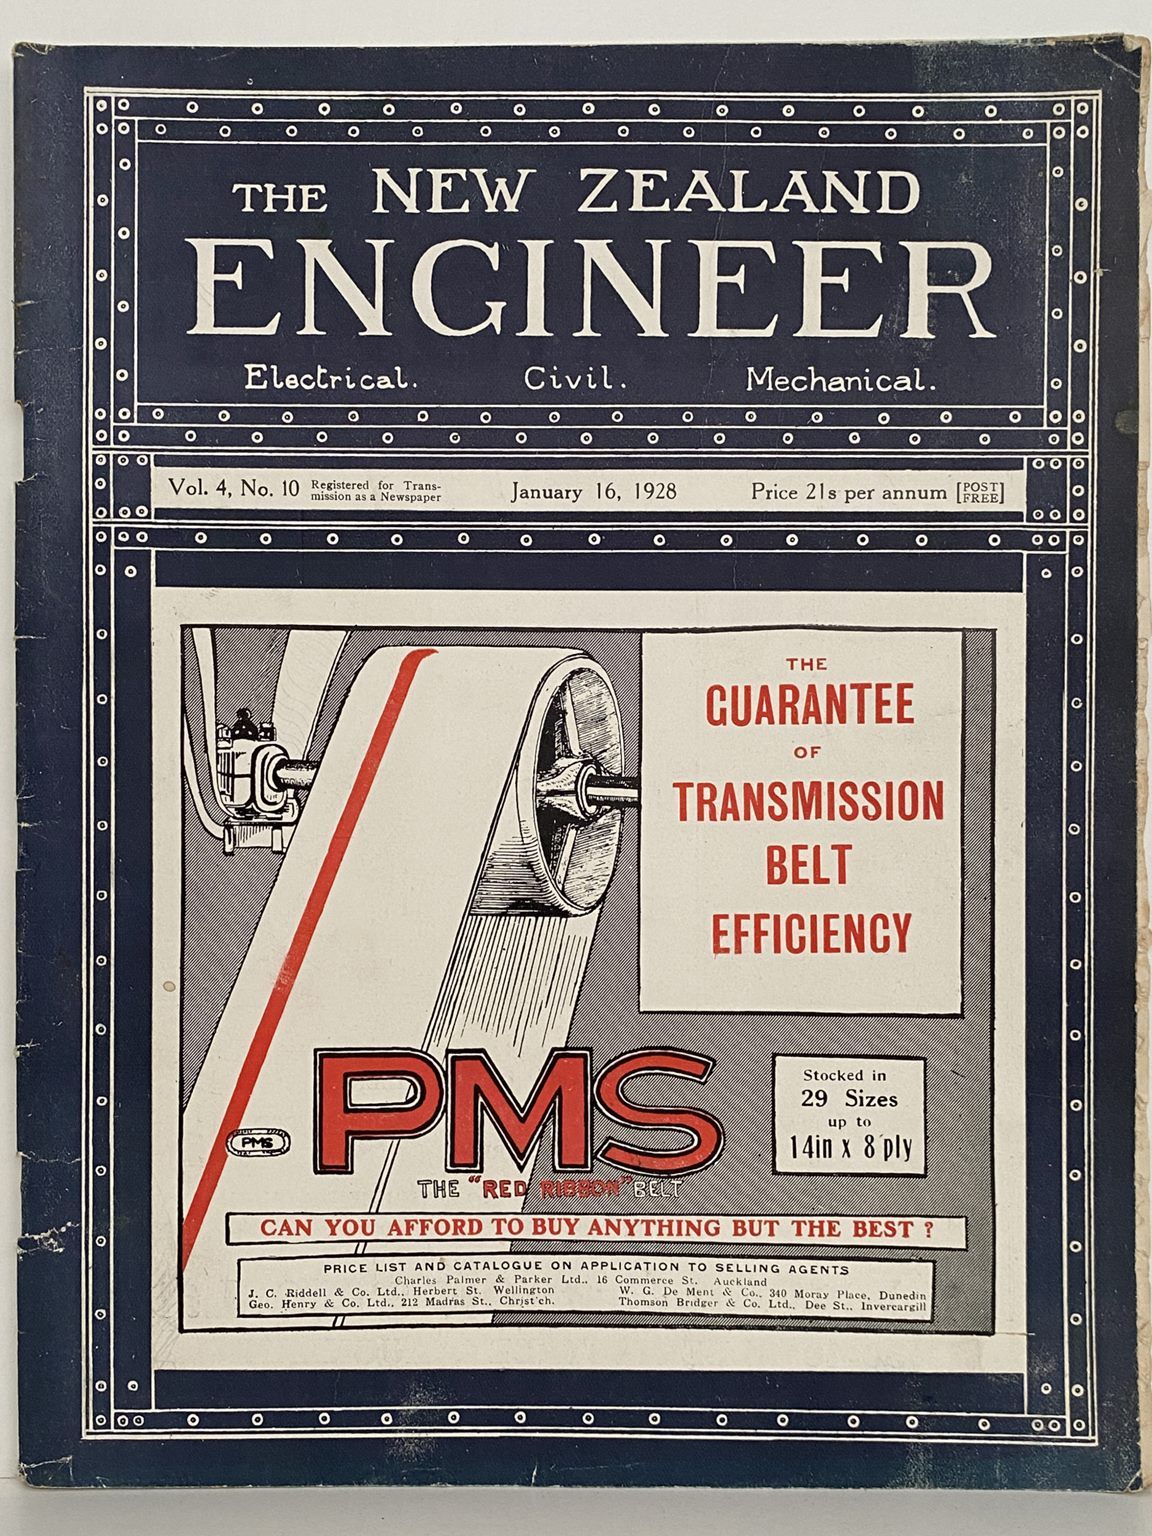 OLD MAGAZINE: The New Zealand Engineer Vol. 4, No. 10 - 16 January 1928